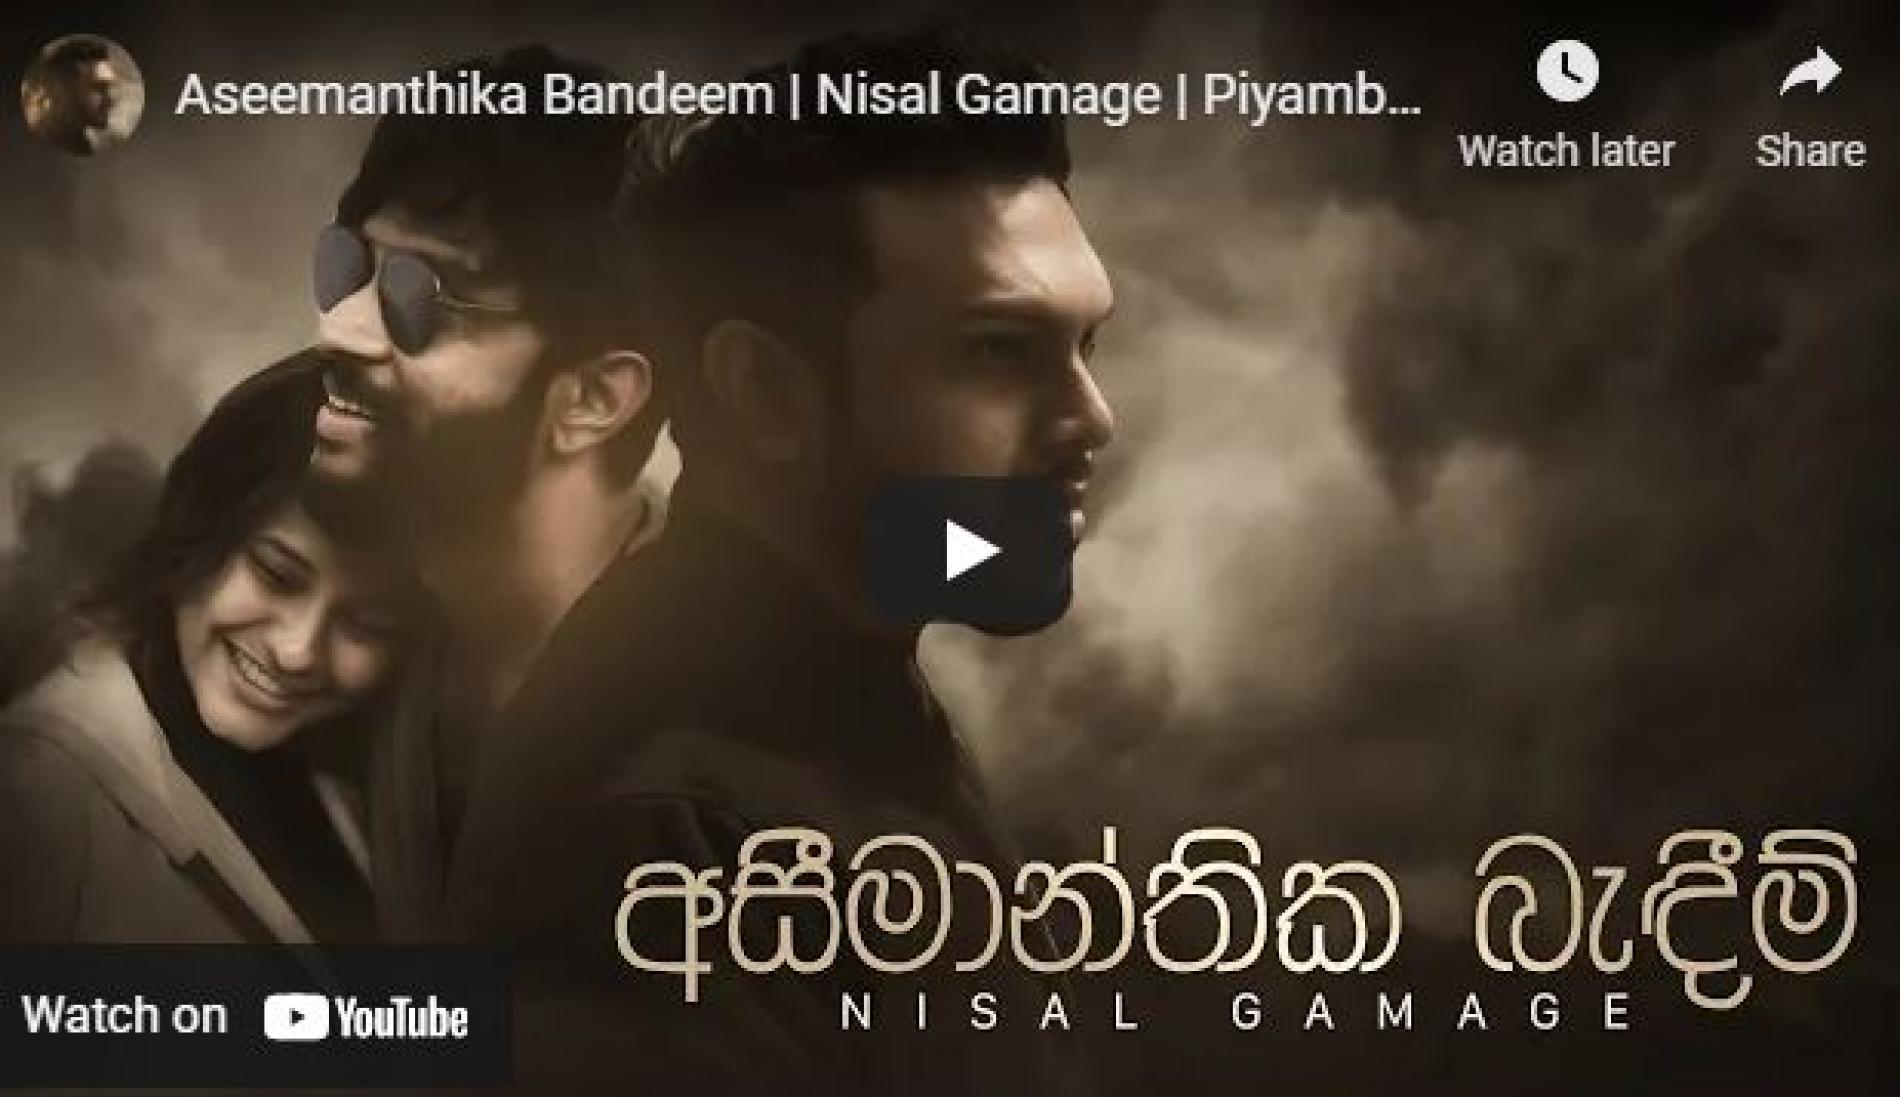 New Music : Aseemanthika Bandeem | Nisal Gamage | Piyambanna Ayeth Movie Song